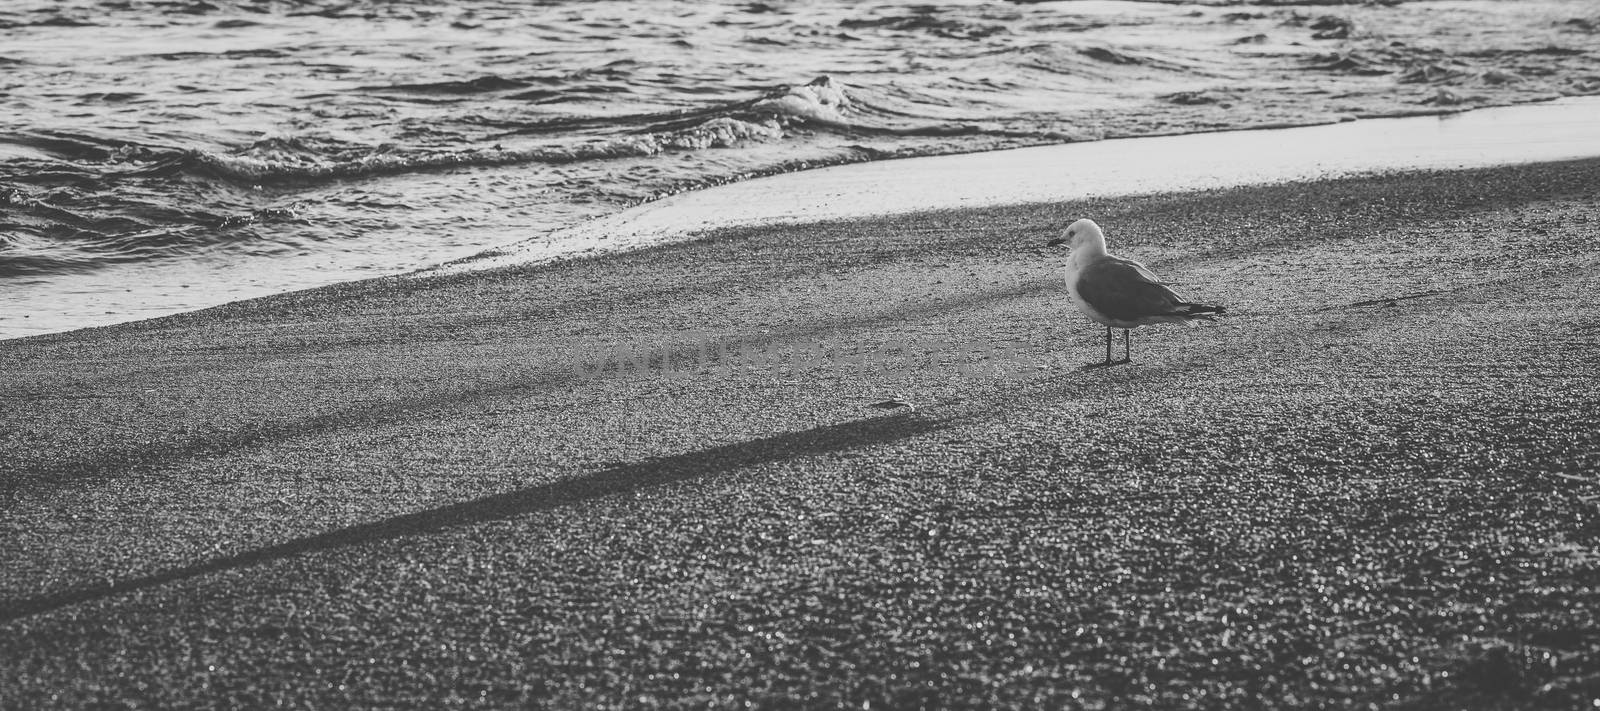 Seagull on the beach. by artistrobd